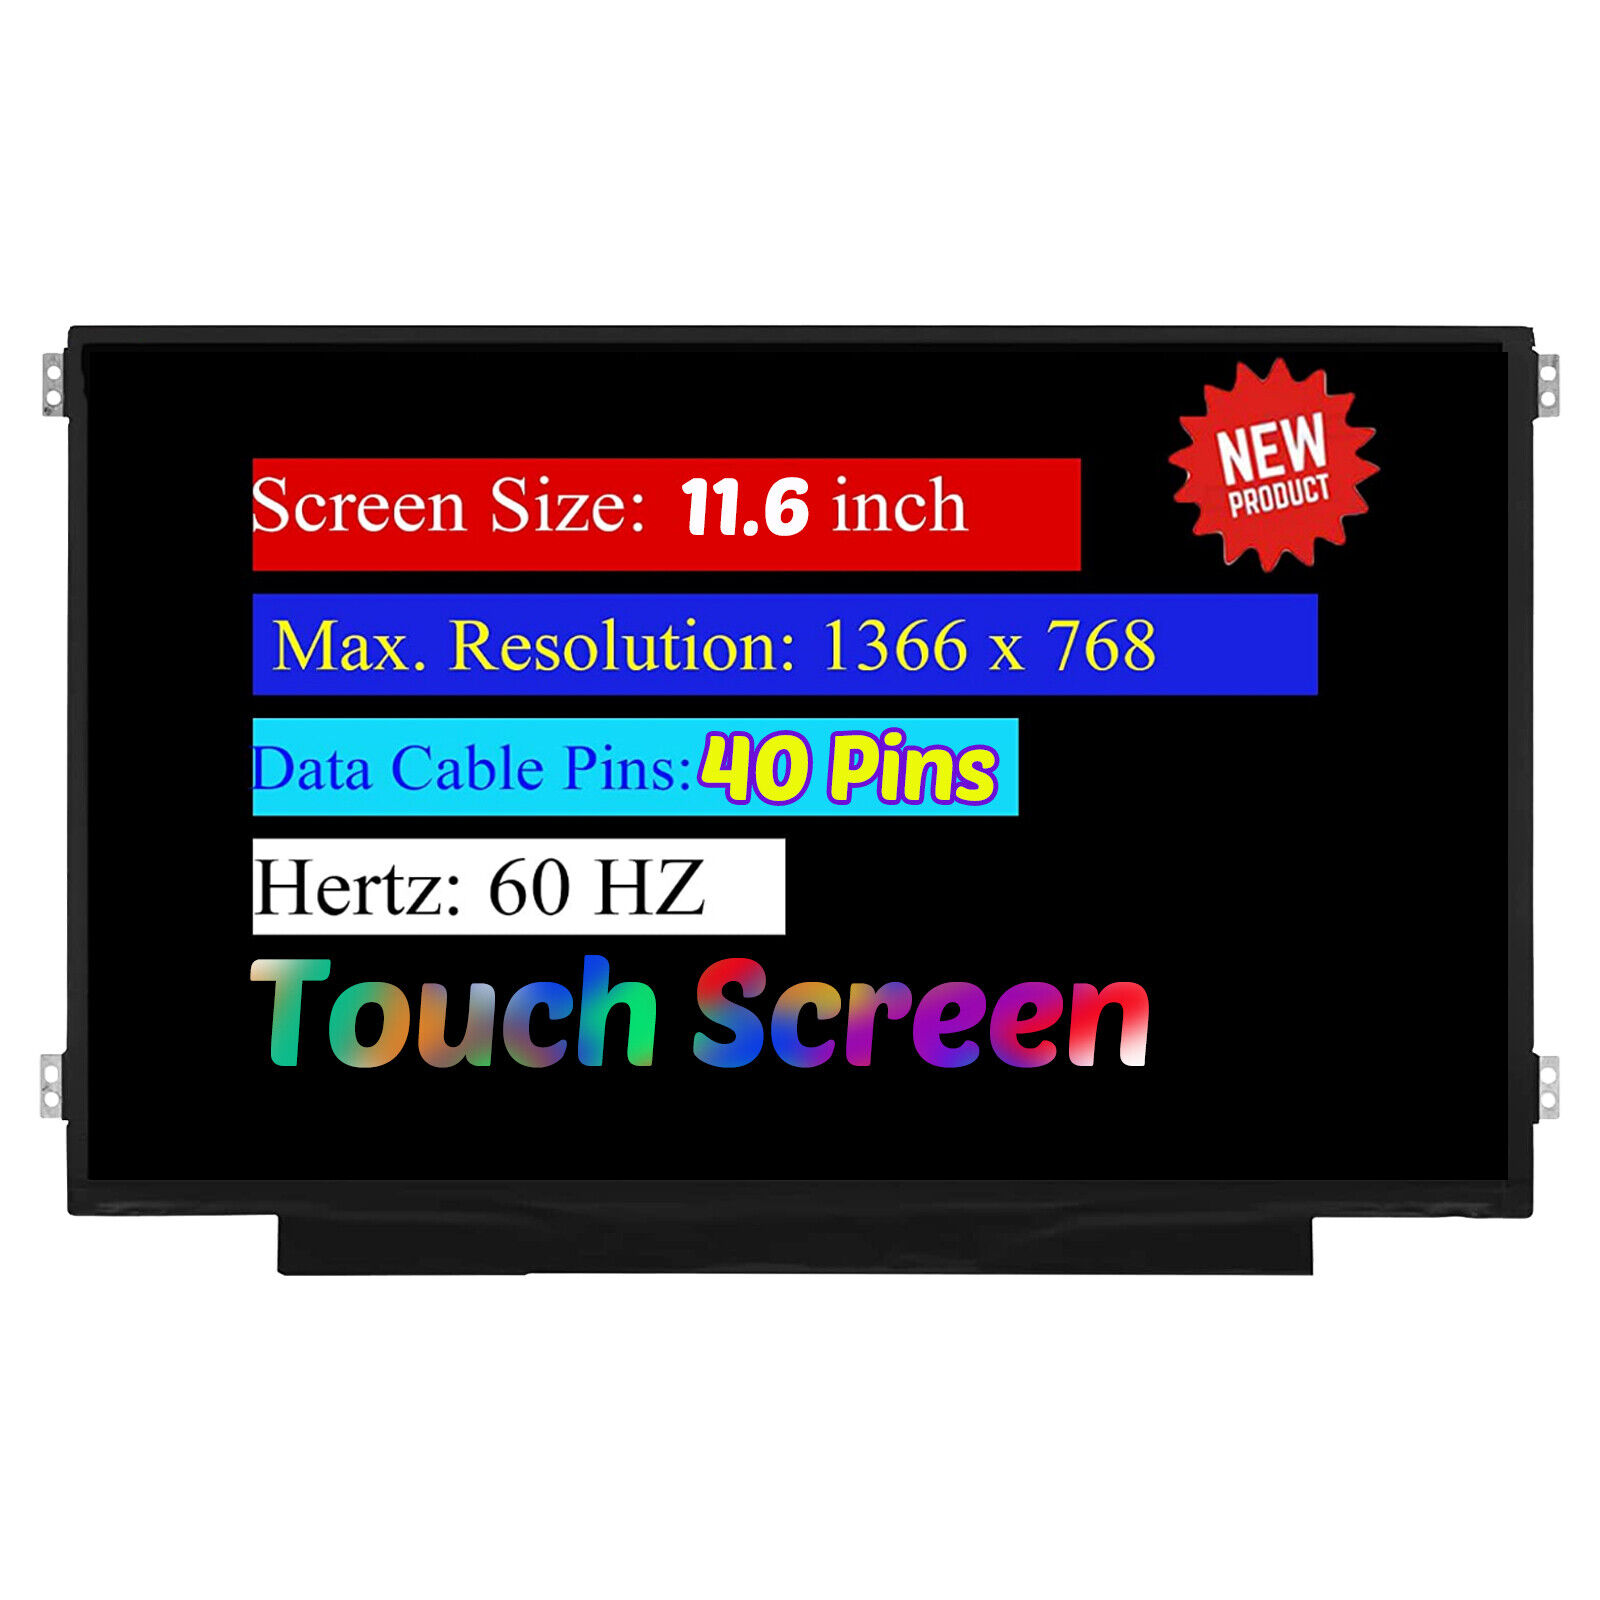 B116XAK01.1 B116XAK01.2 HD 1366*768 WXGA 11.6'' 40pin NEW LCD LED TOUCH Screen